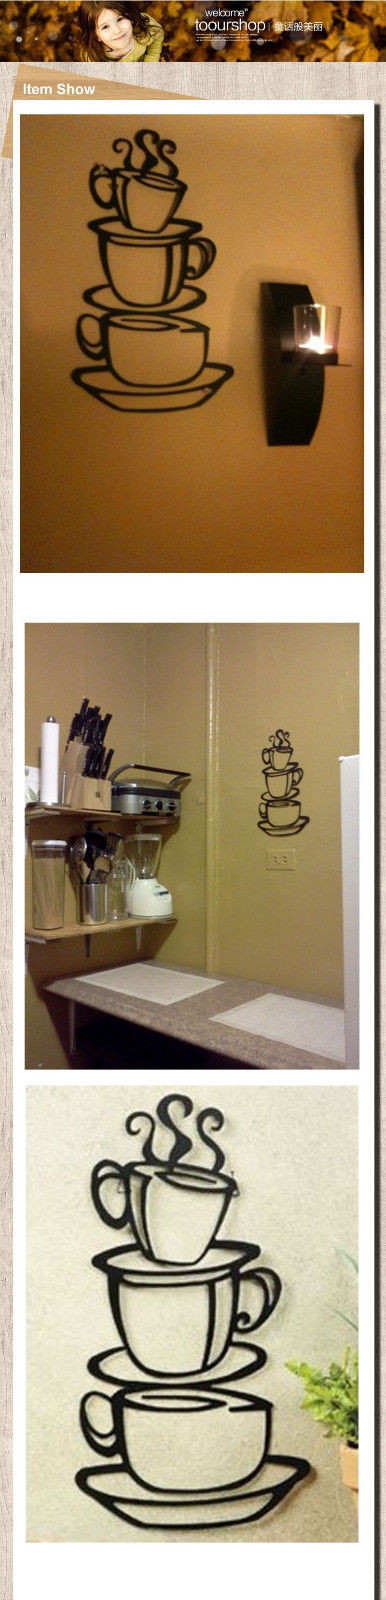 Metal Wall Art Kitchen
 Coffee House Cup Java Silhouette Wall Art Metal Mug